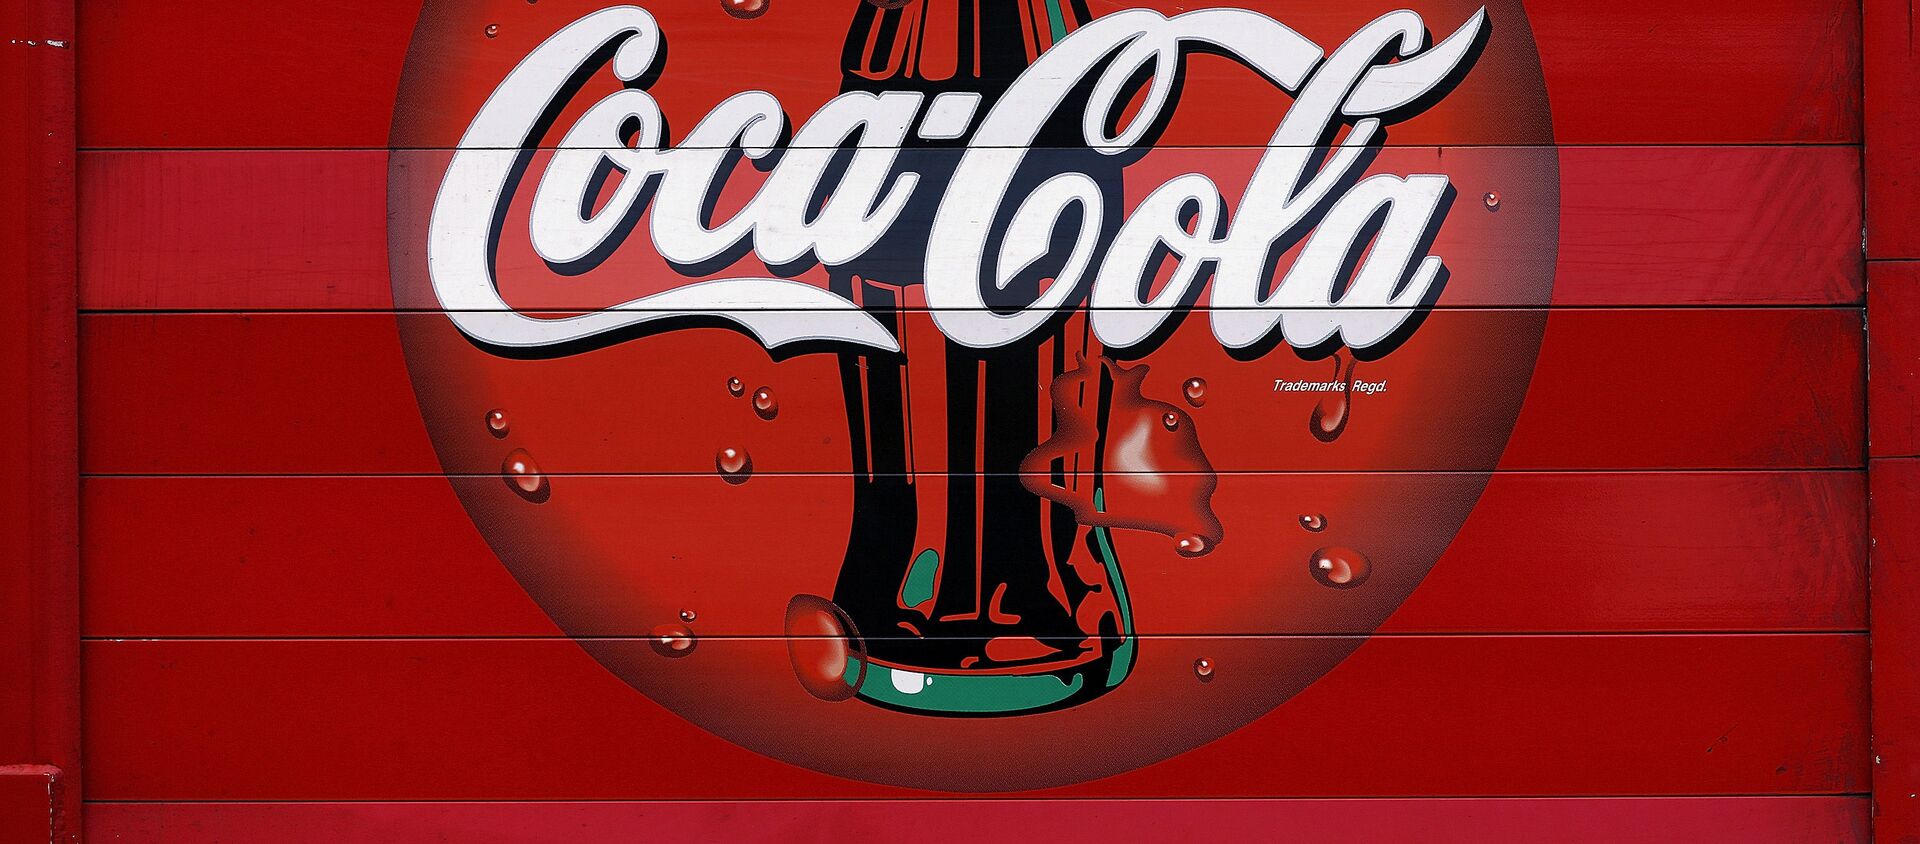 Coca Cola - Sputnik Việt Nam, 1920, 01.07.2019